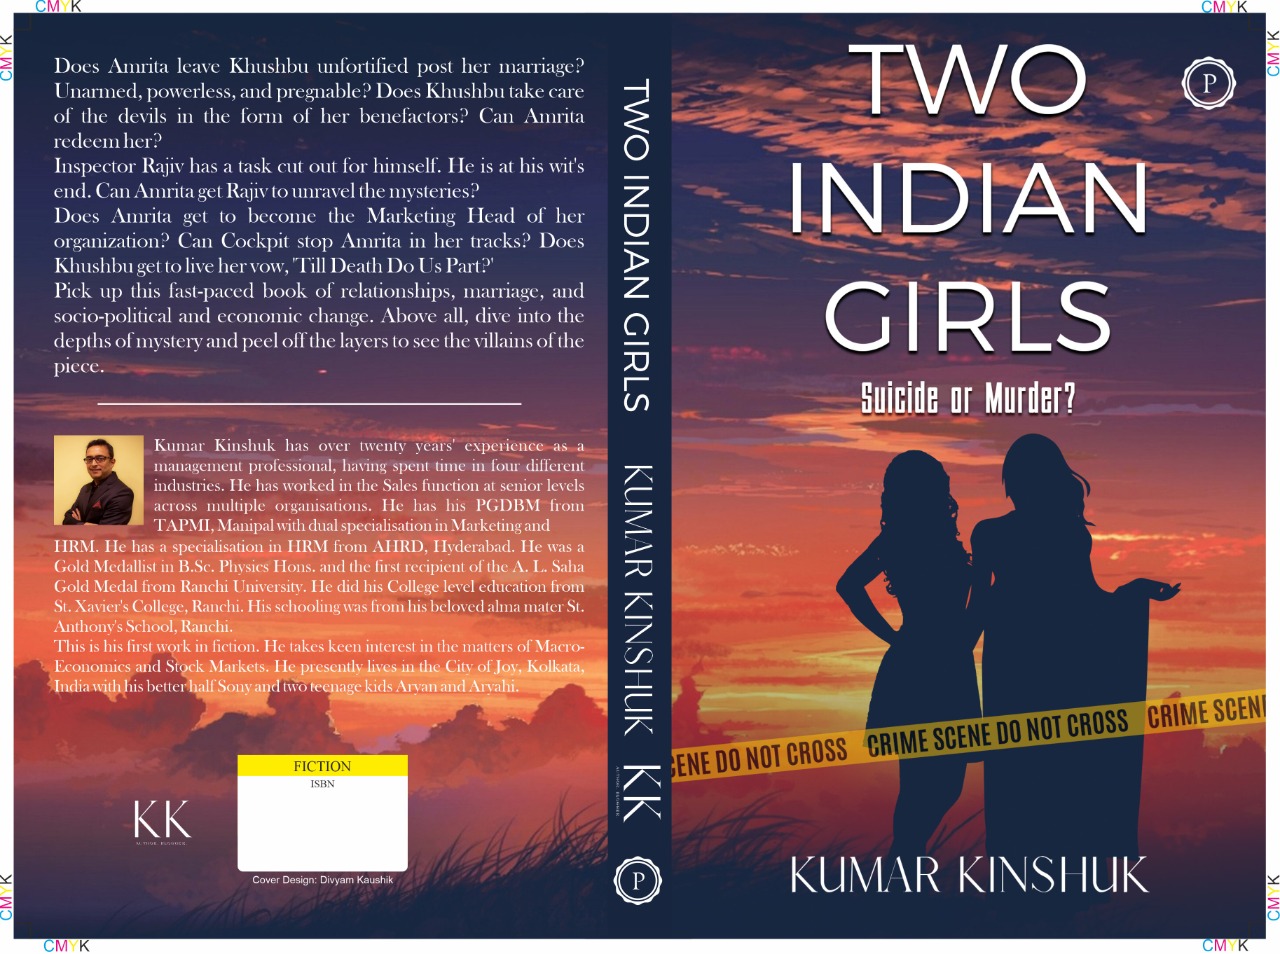 FREE: Two Indian Girls by Kumar Kinshuk